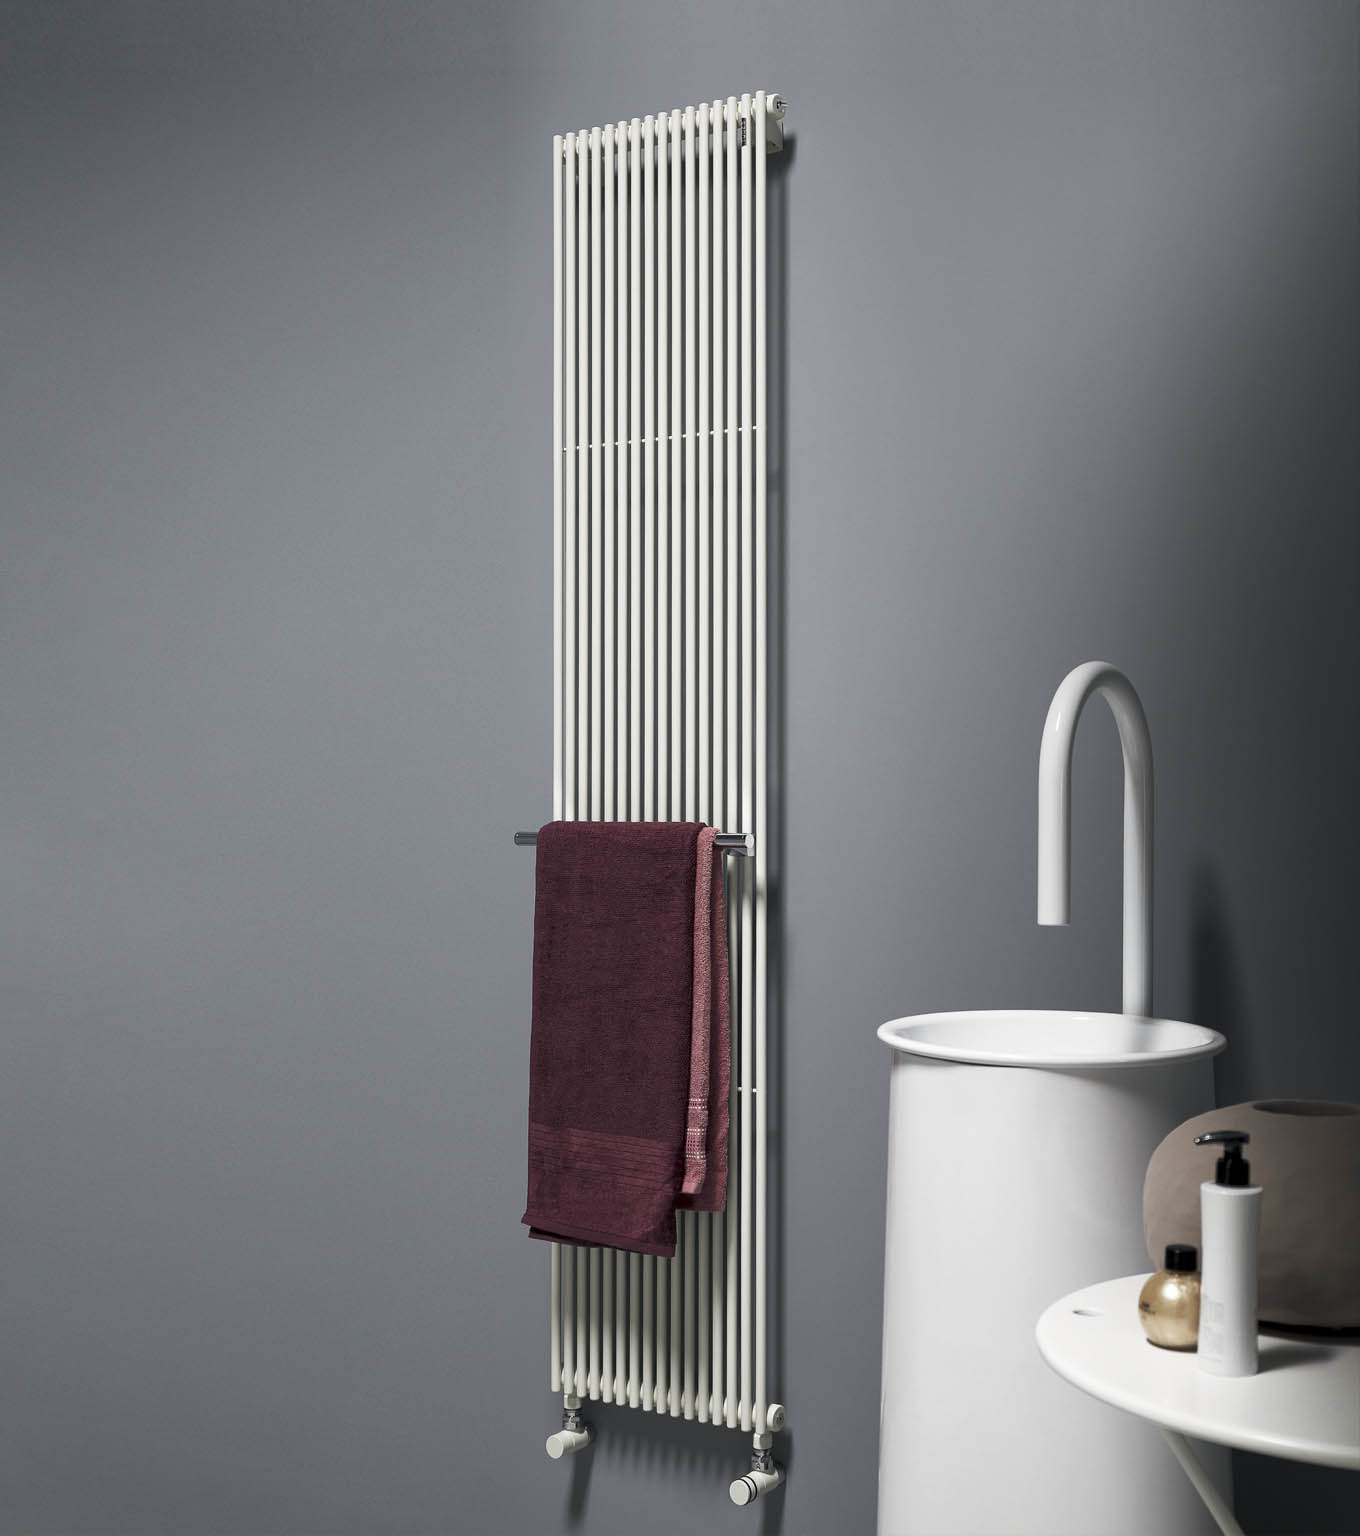 Basic 14 hydronic radiator in bathroom